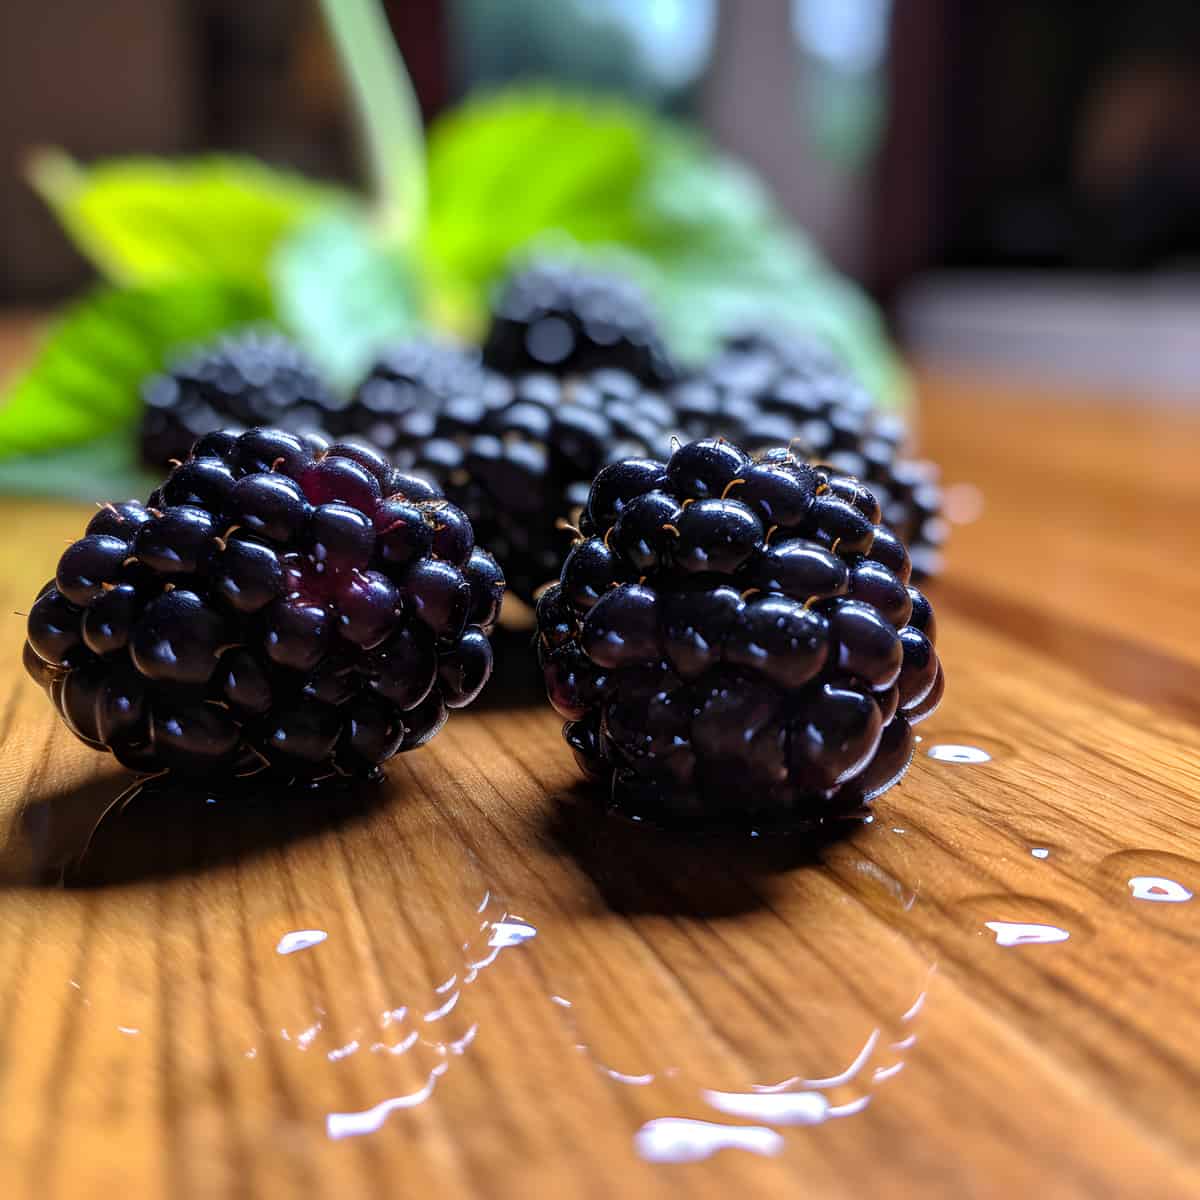 Dewberries on a kitchen counter